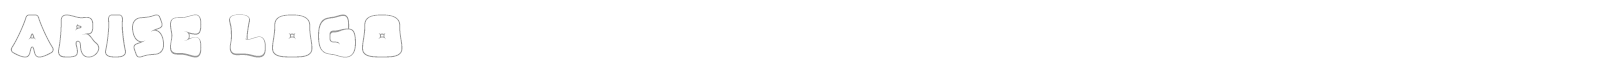 Font ARISE logo